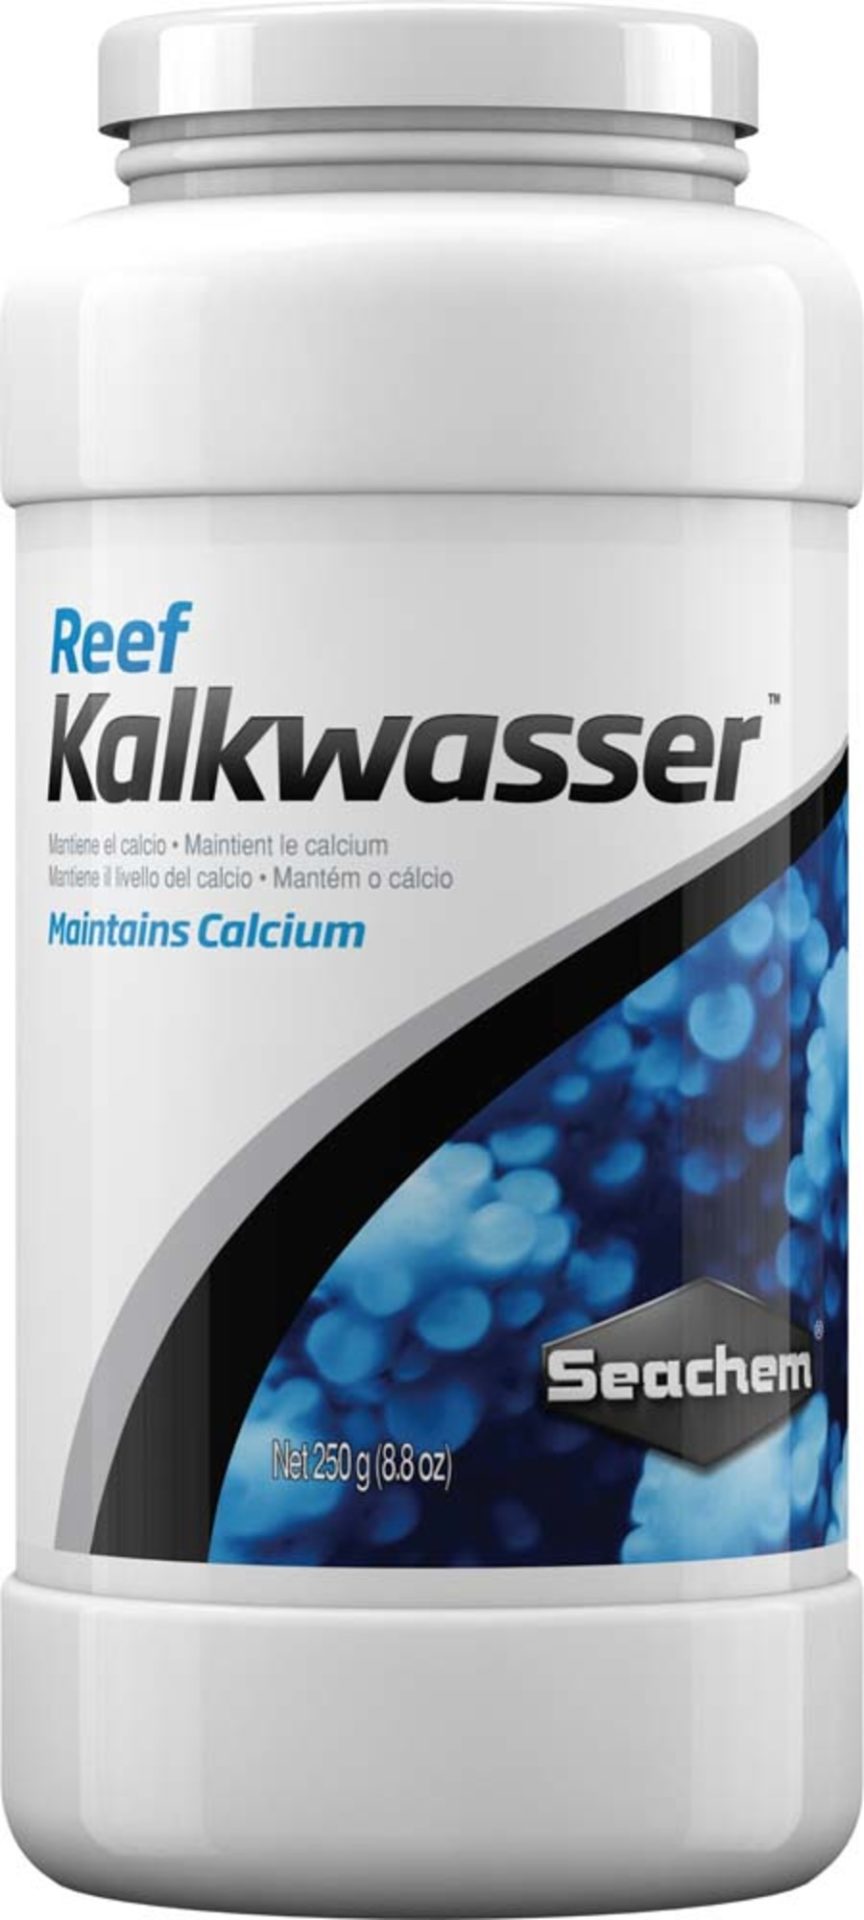 Reef Kalkwasser Powder - Seachem - Seachem